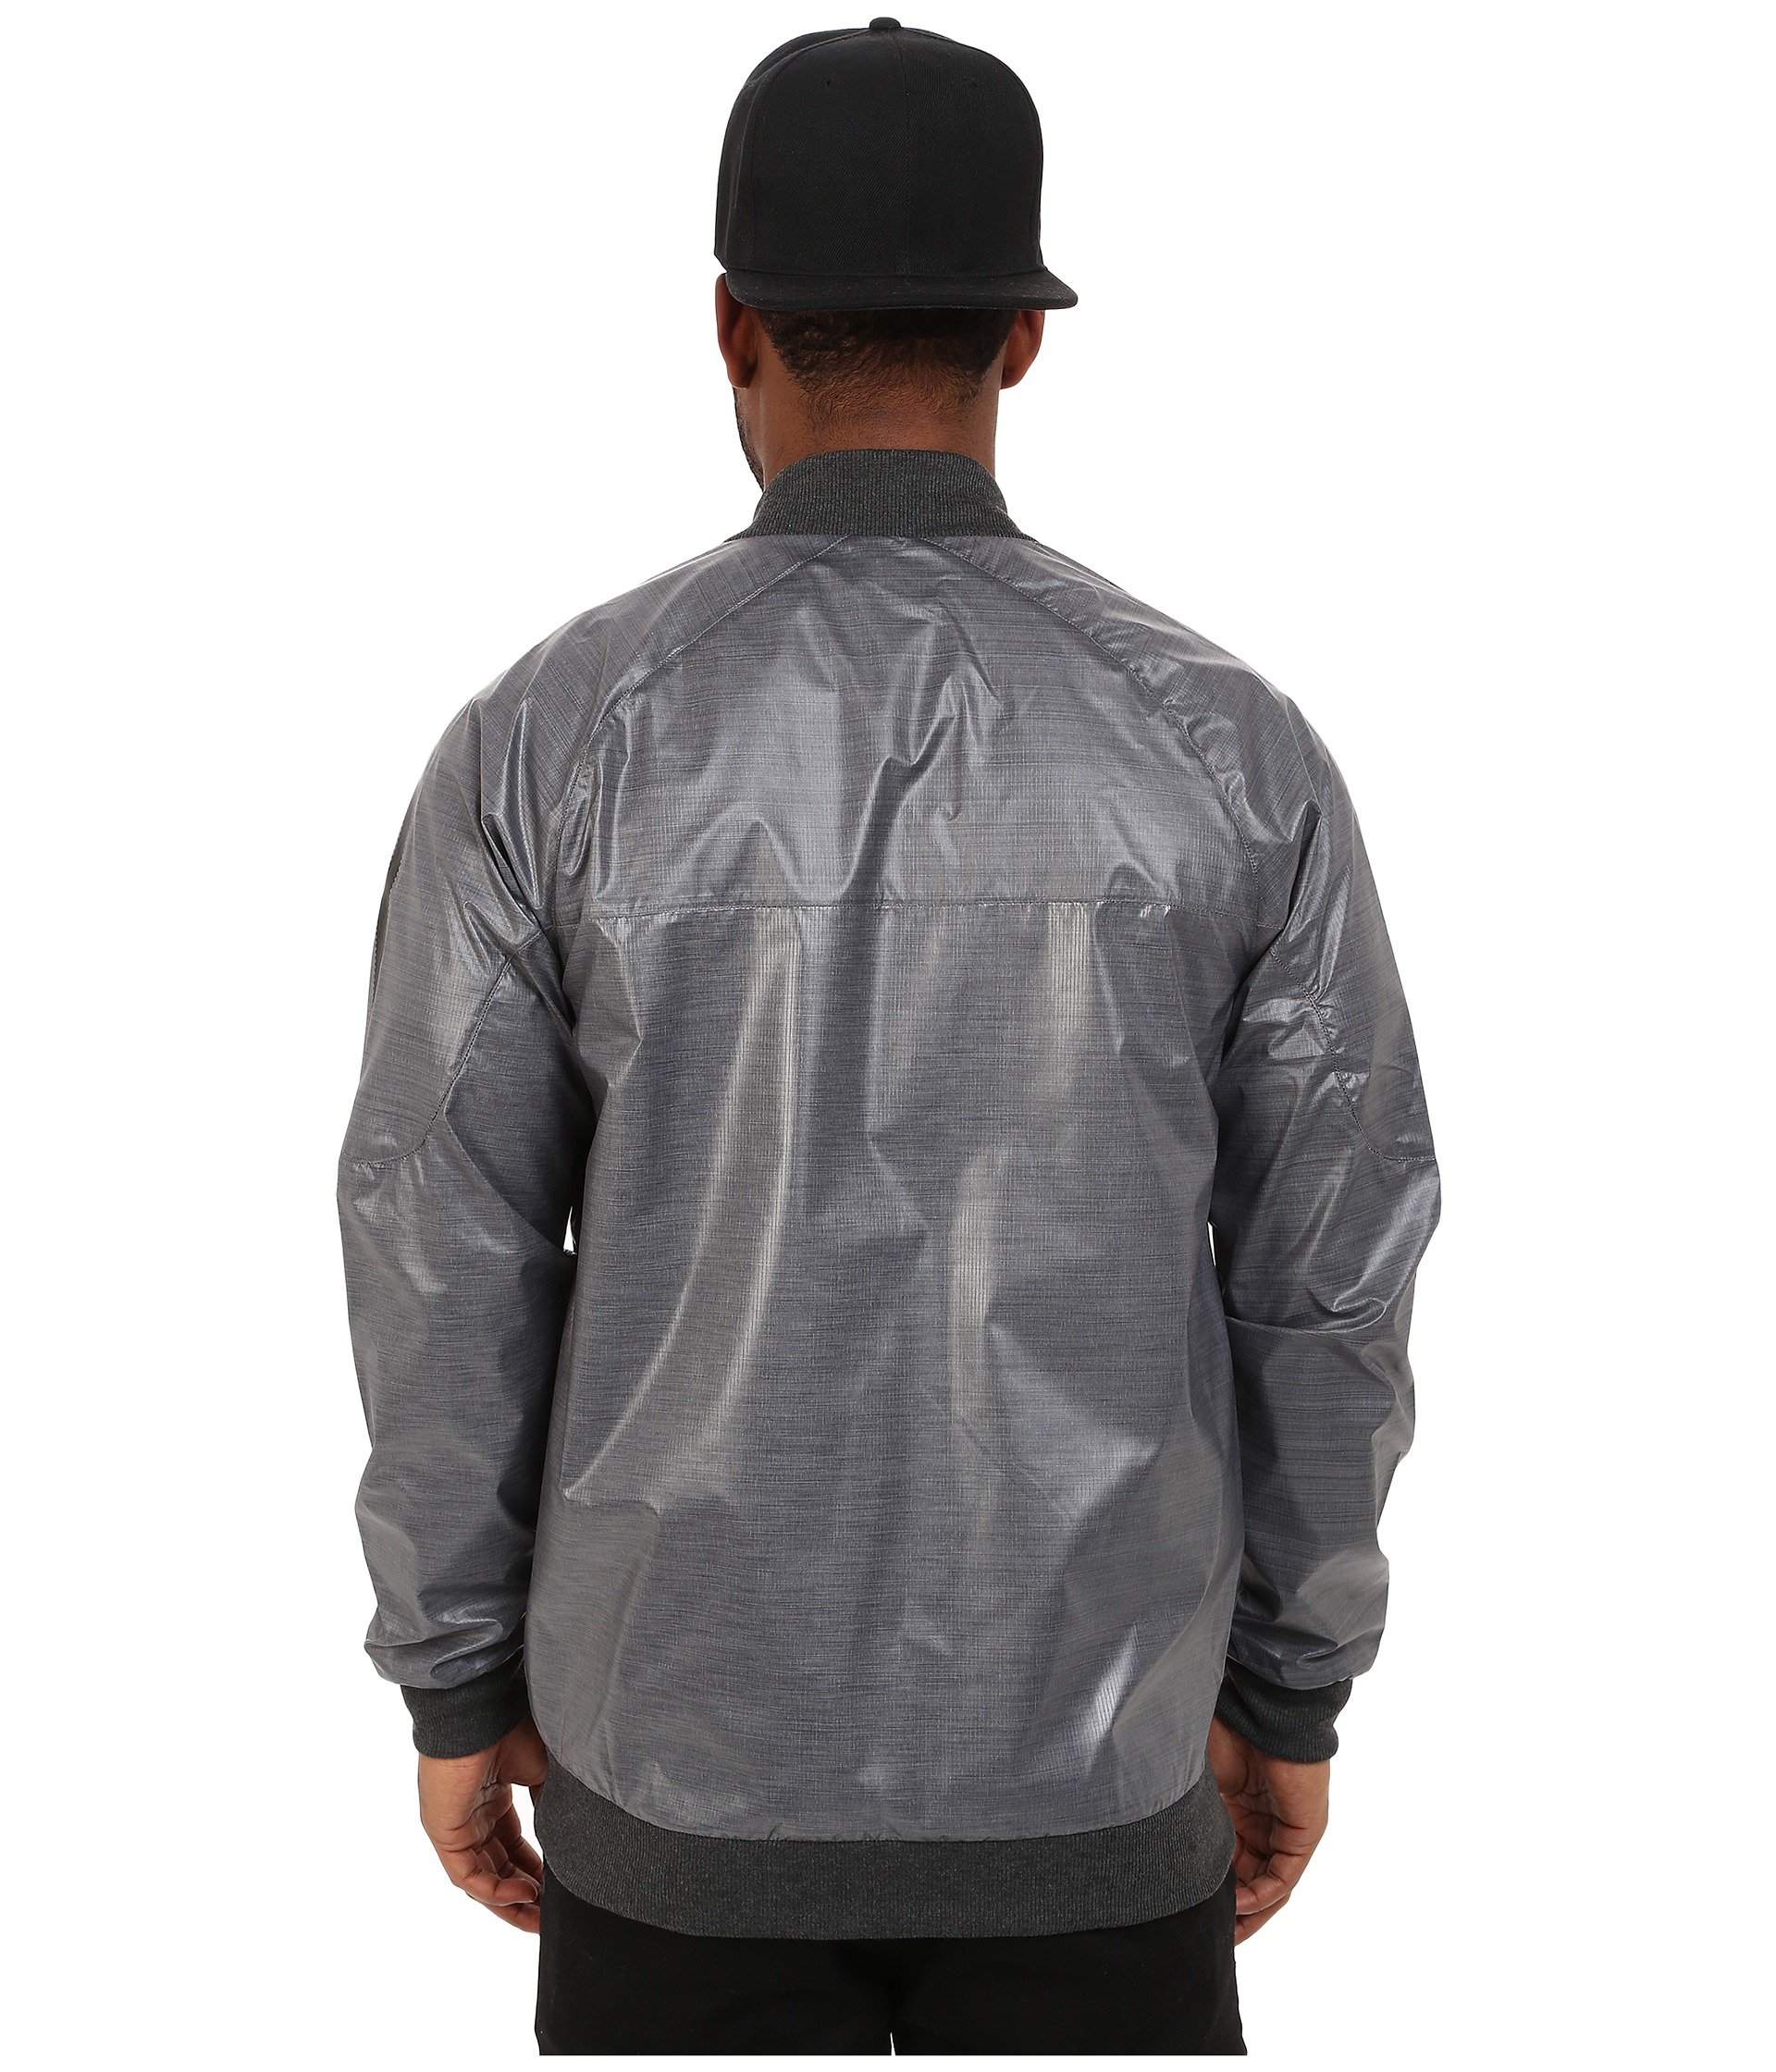 adidas Originals Reflex Track Jacket in Gray for Men - Lyst